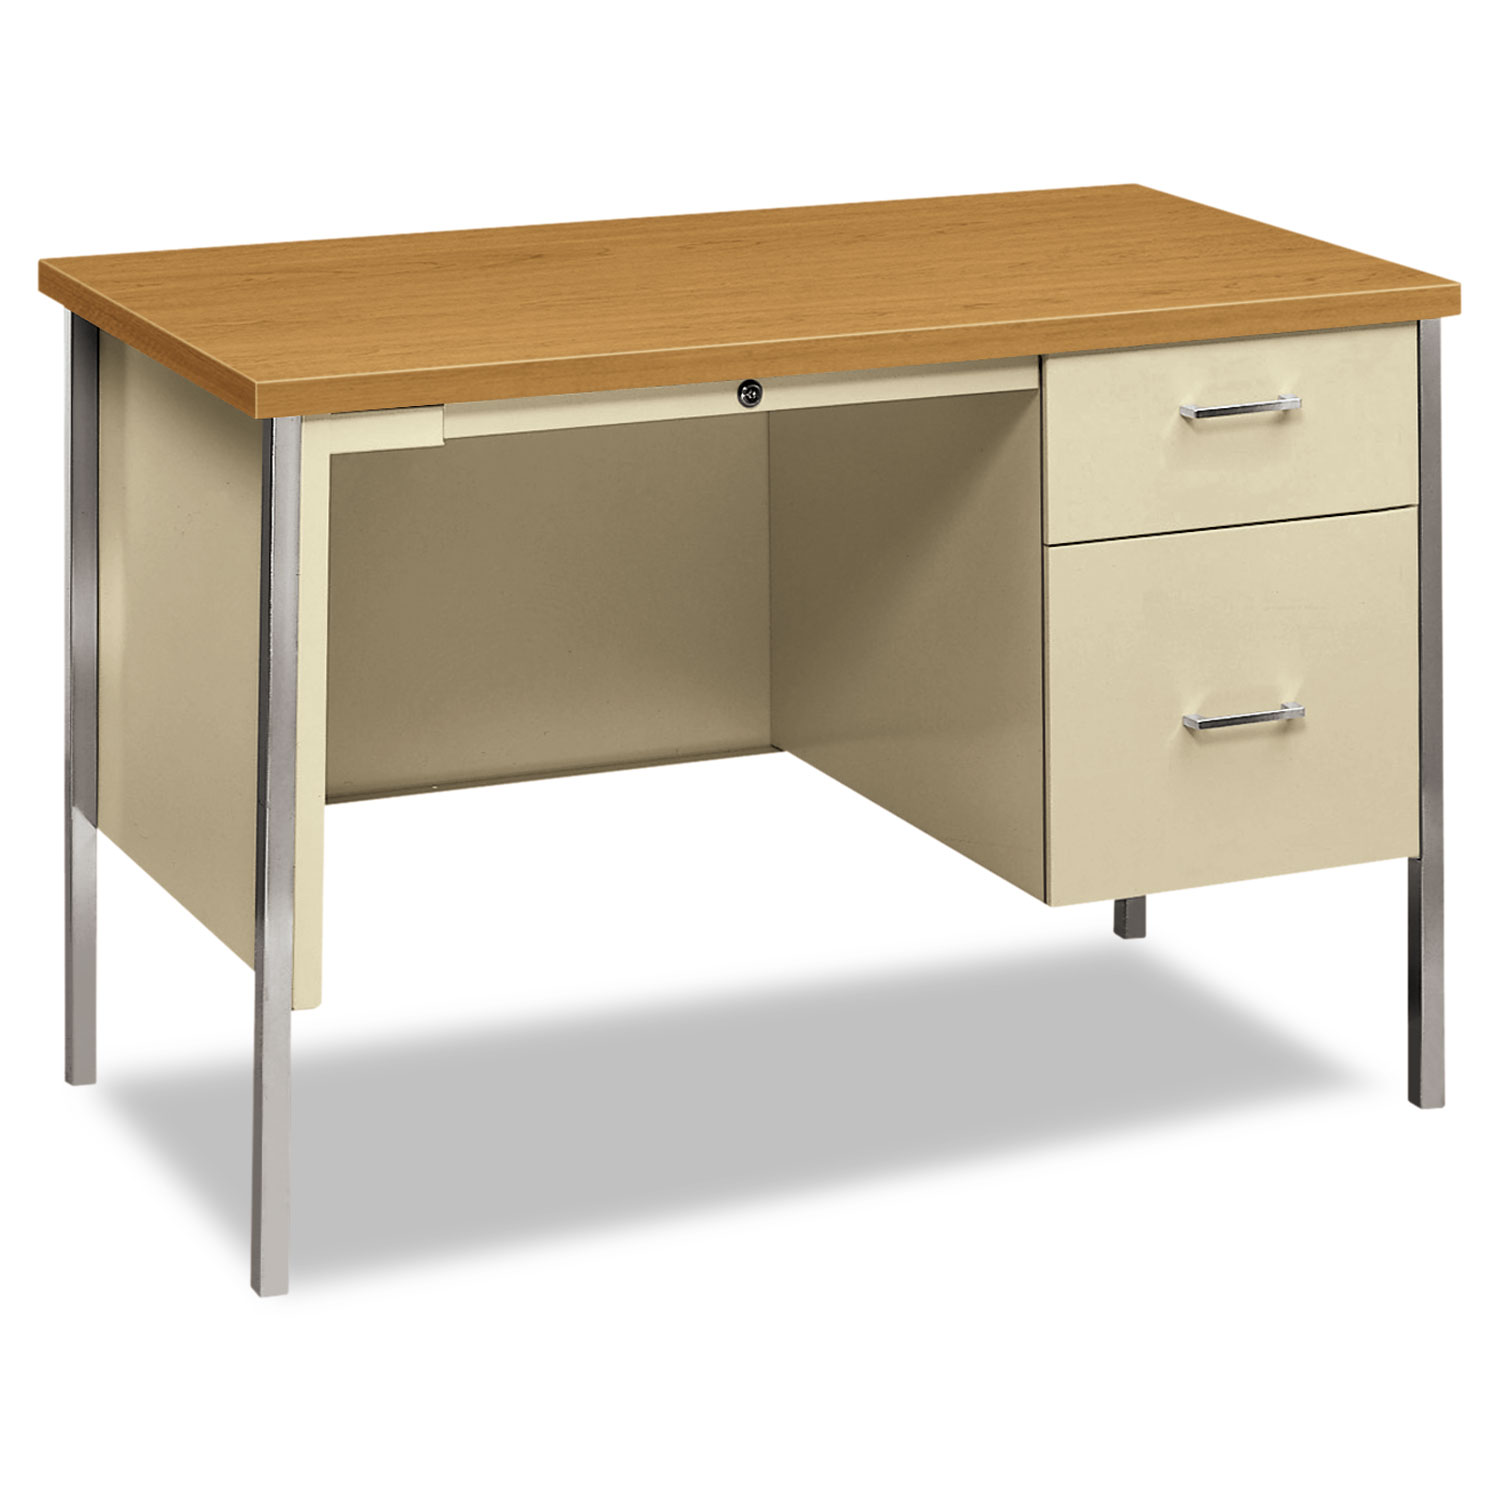  HON H34002R.C.L 34000 Series Right Pedestal Desk, 45.25w x 24d x 29.5h, Harvest/Putty (HON34002RCL) 